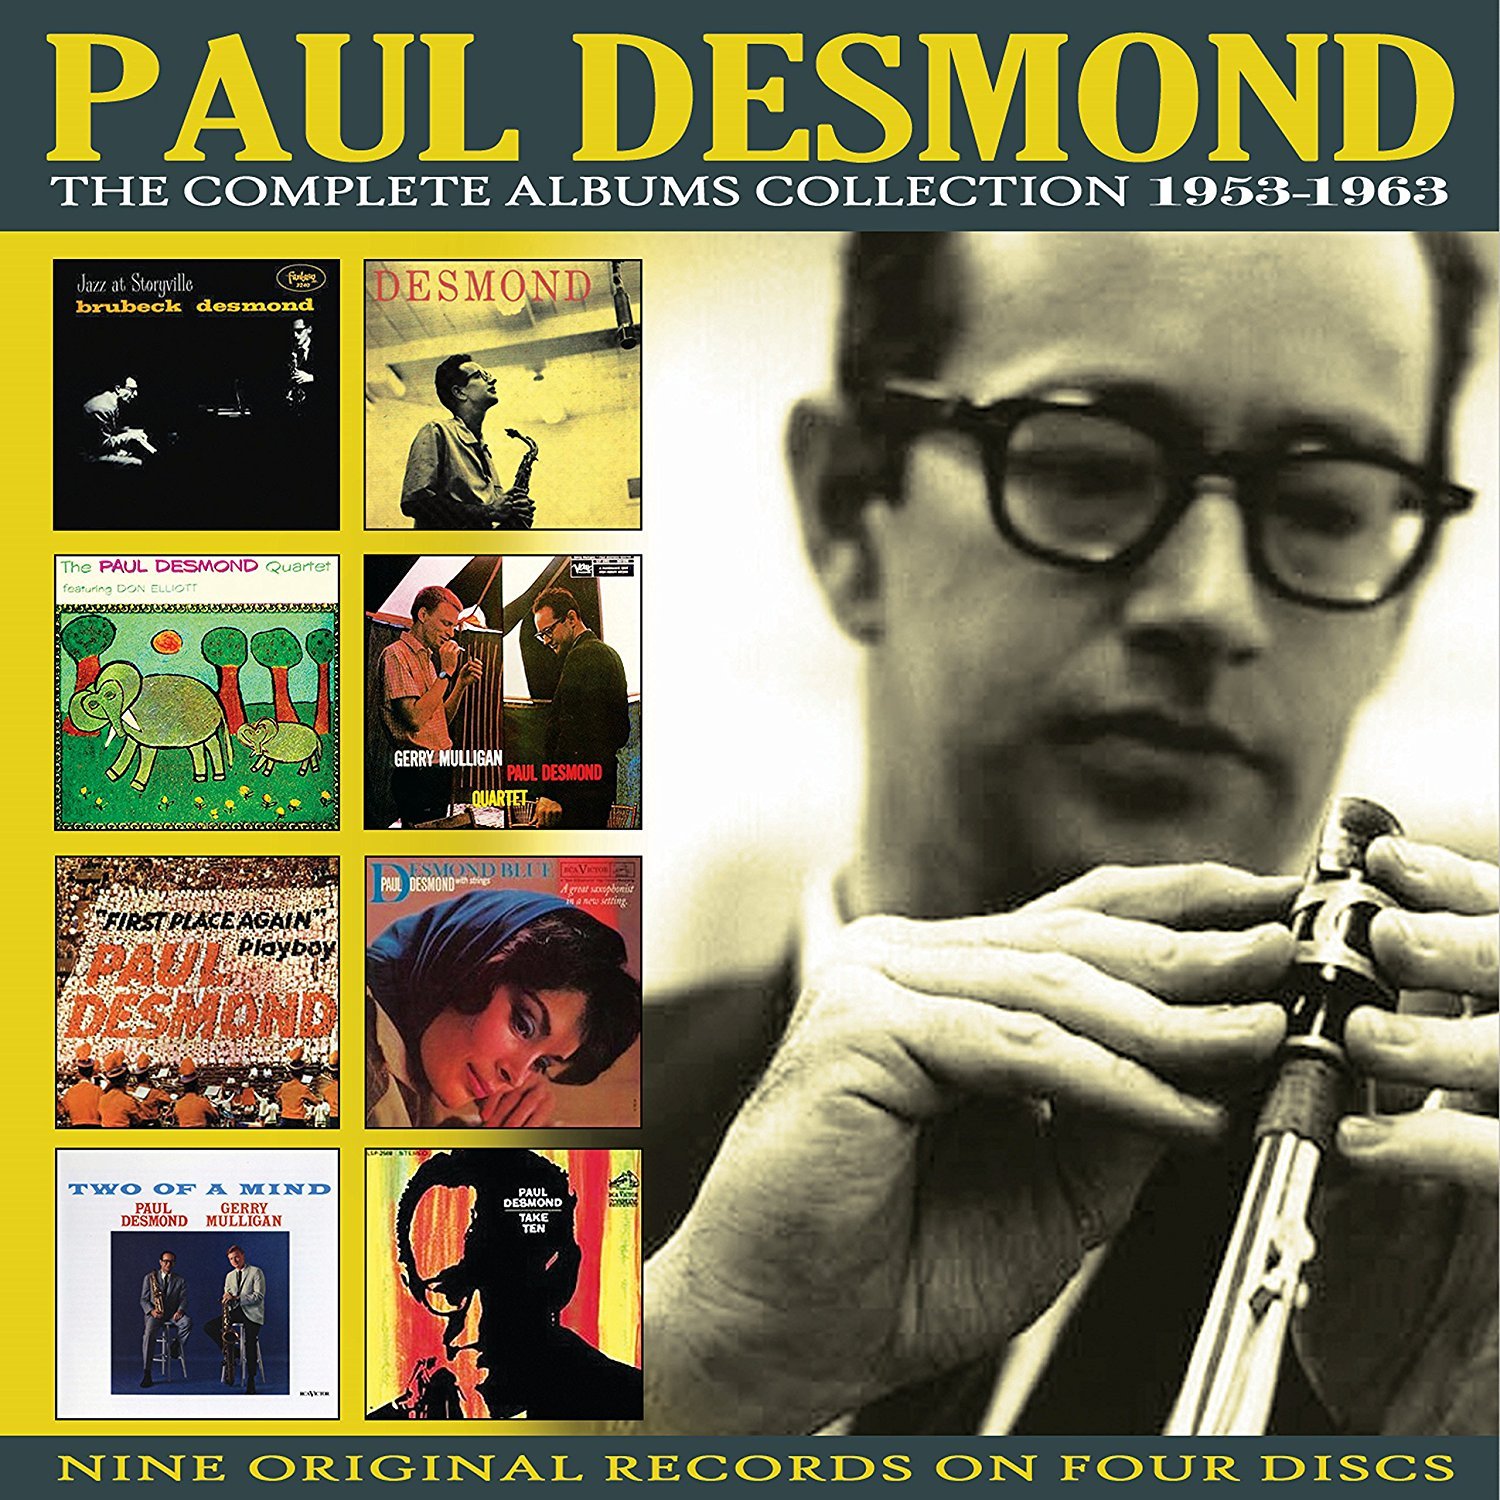 The Desmond Tone: Celebrating a Saxophone Legend's Birthday